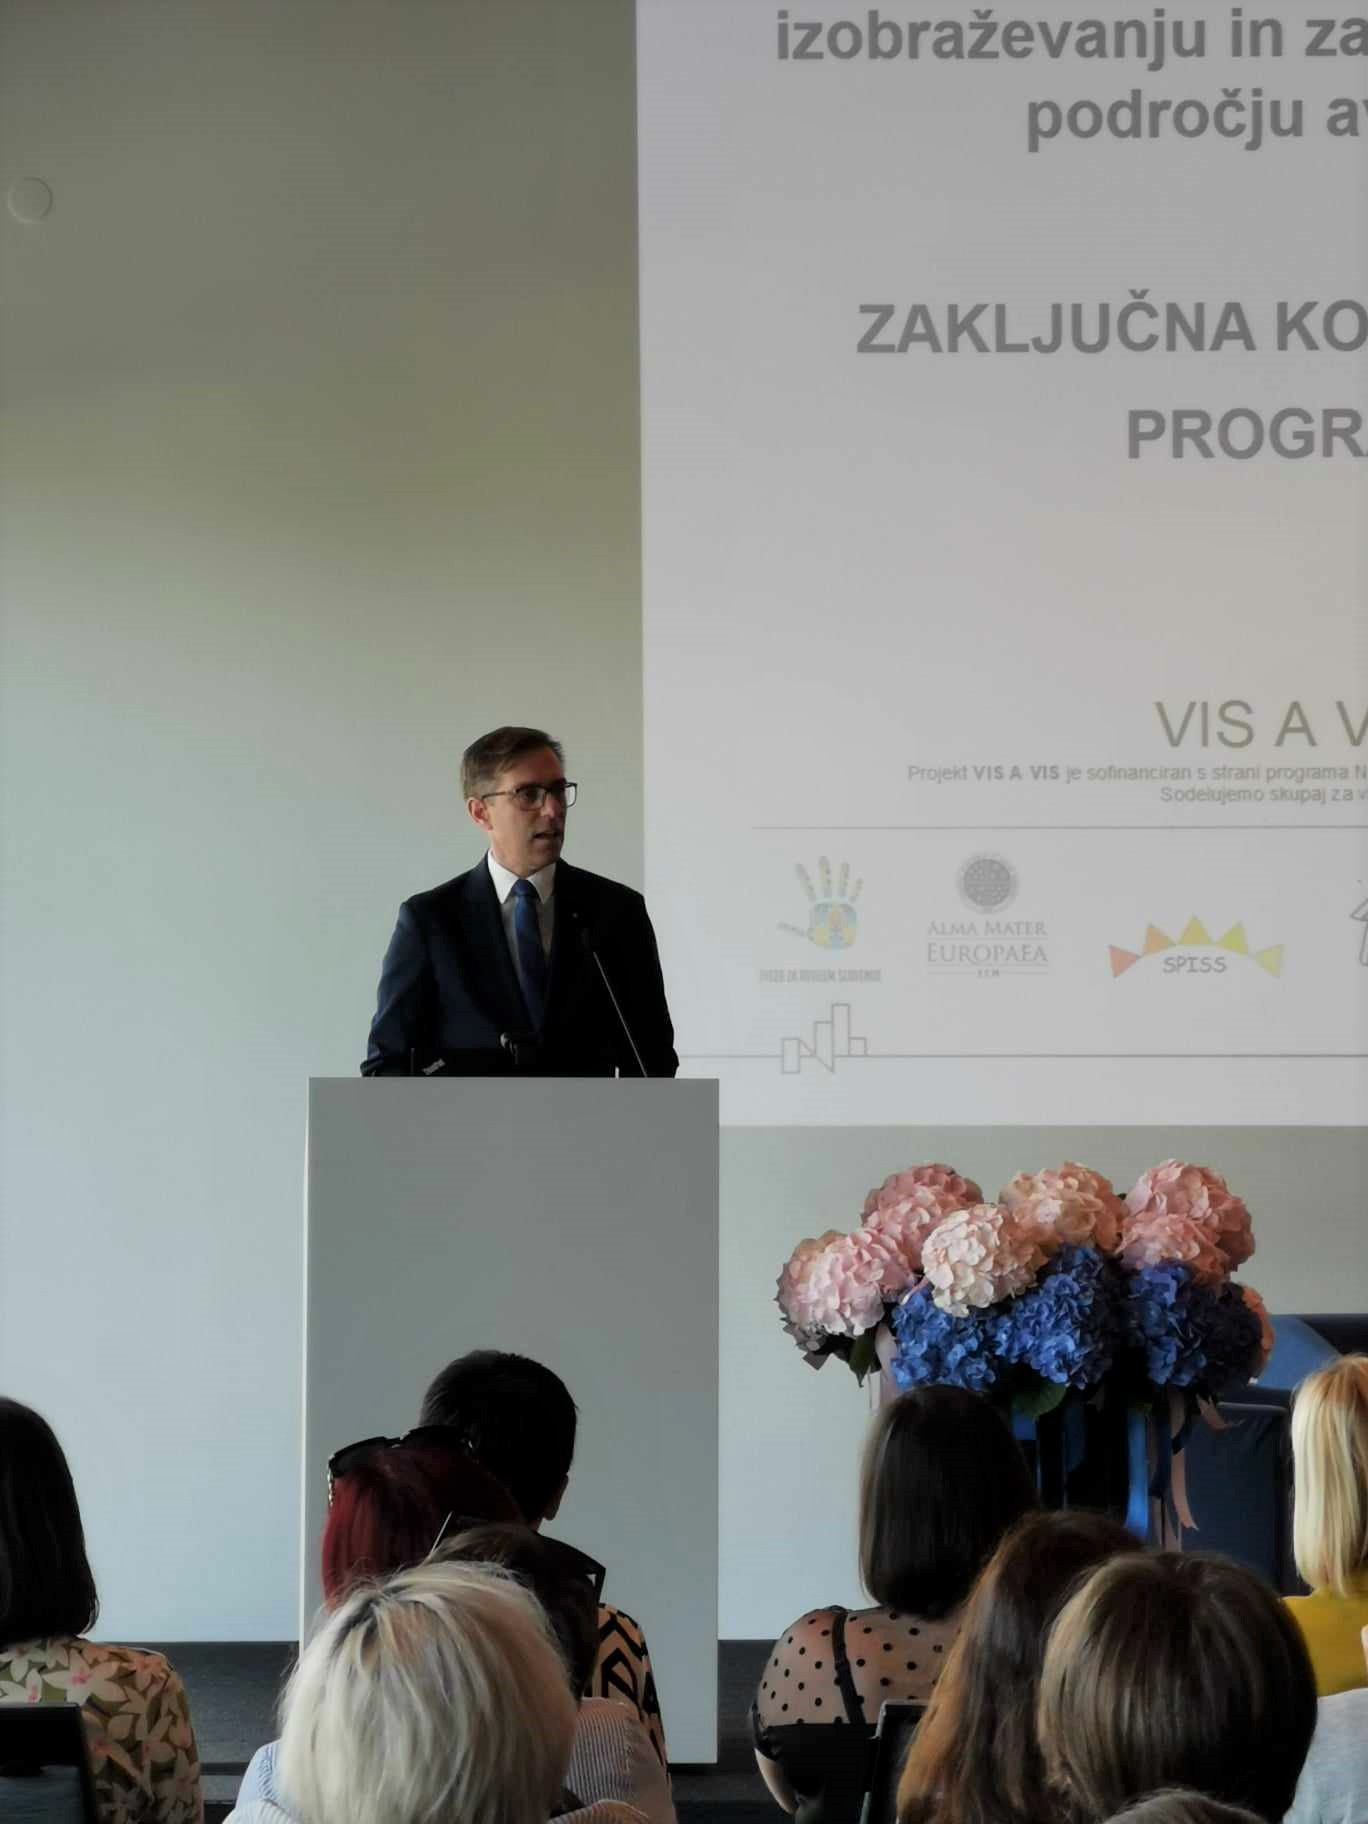 Mag. Marko Koprivc during his opening speech.